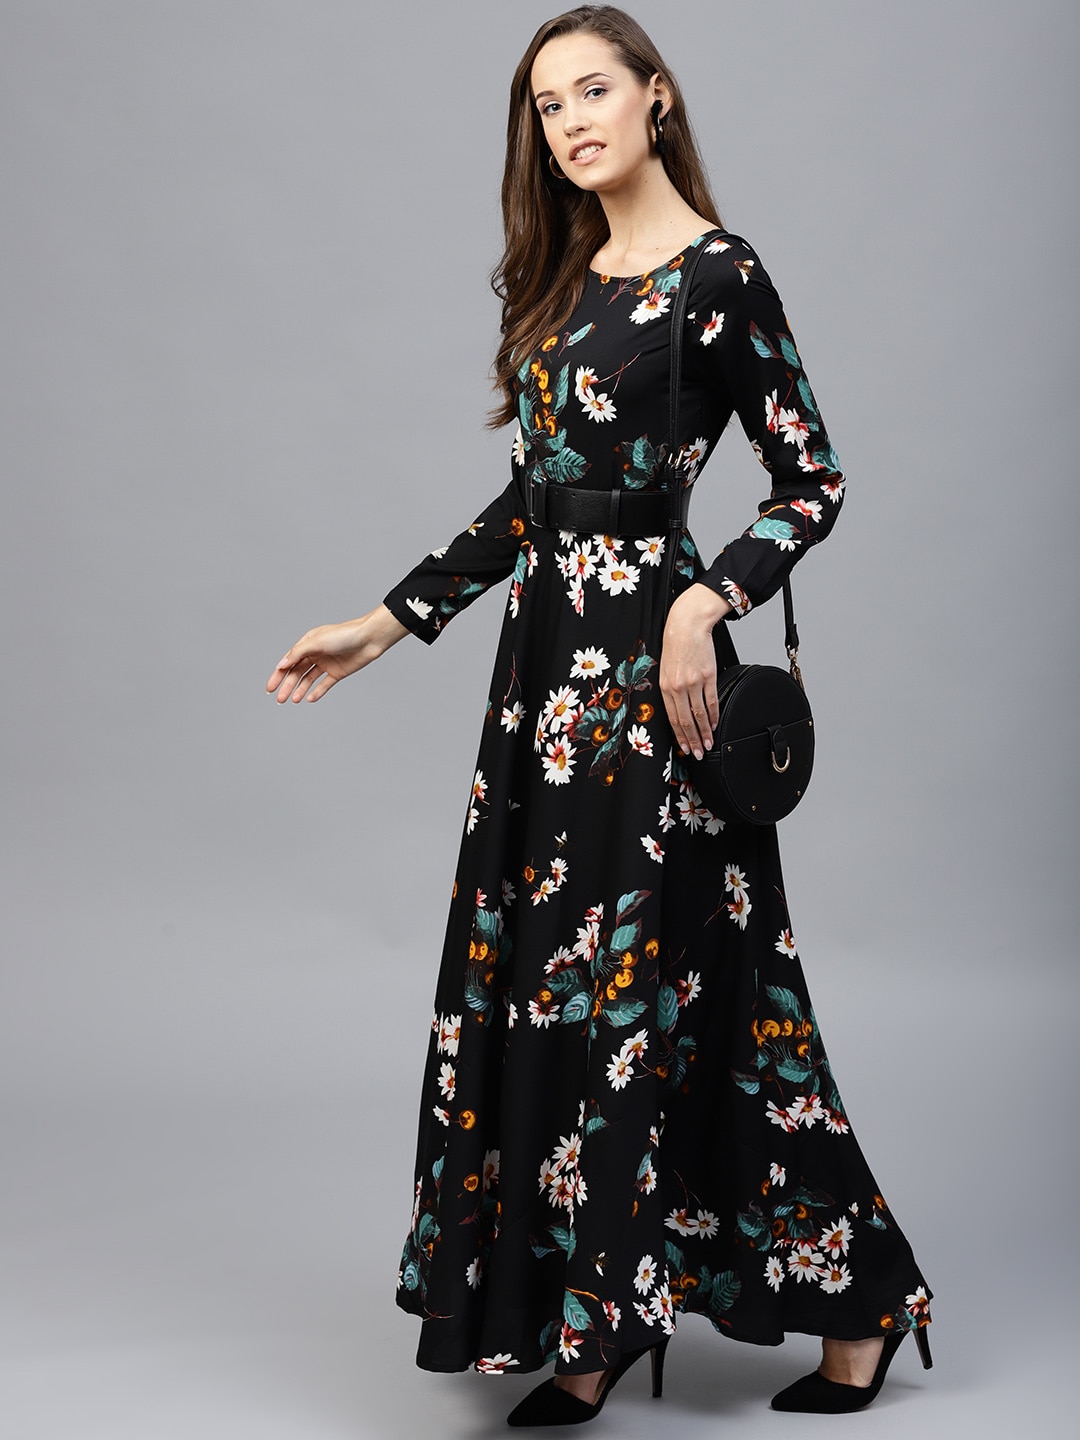 Tokyo Talkies Black Floral Print Flared Maxi Dress with a Belt